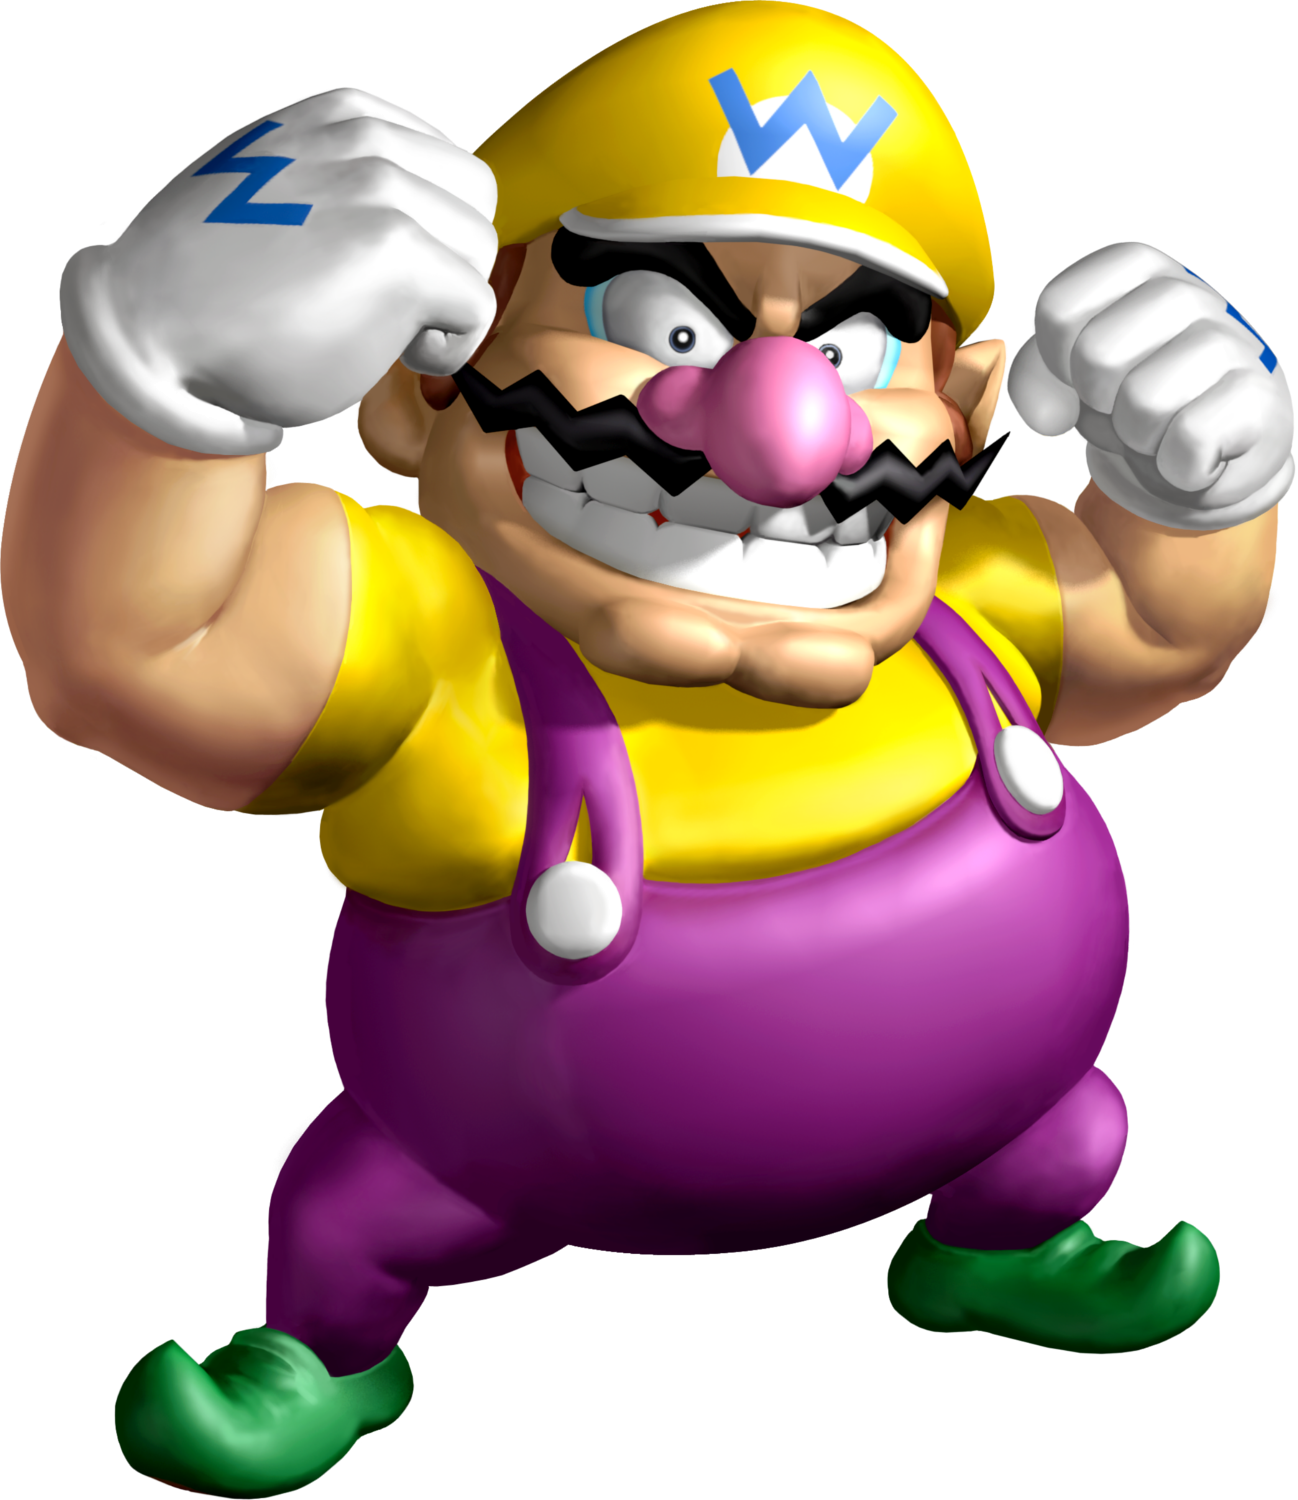 22, November 29, 2017 - Wario Super Mario 64 Ds (1298x1500)